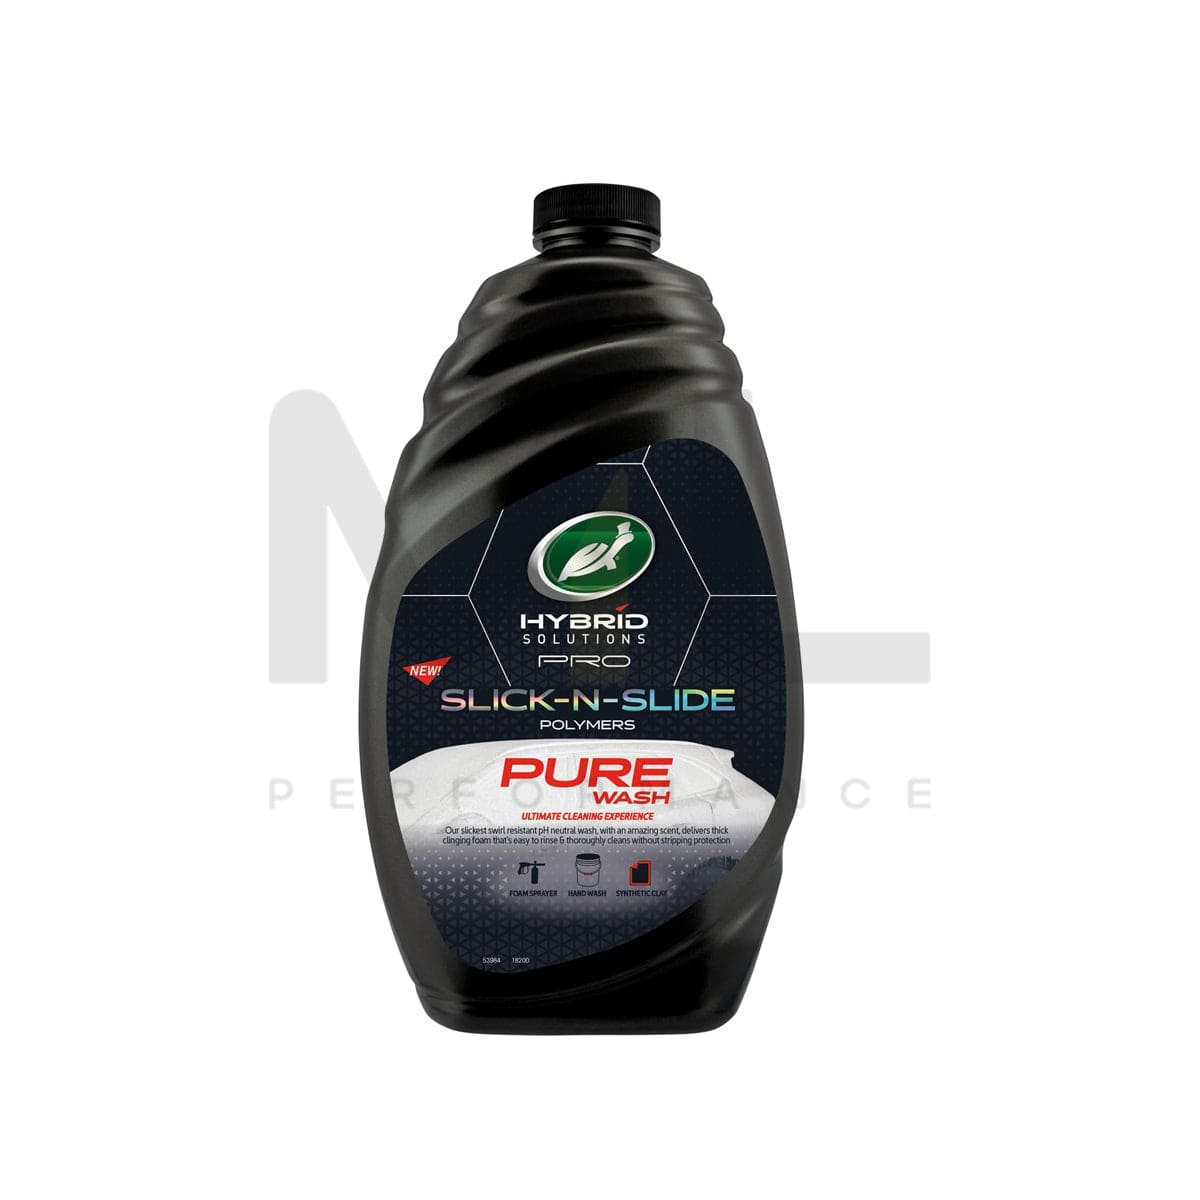 Turtle Wax Hybrid Solutions Pro Pure Wash Professional Car Wash 1.42L